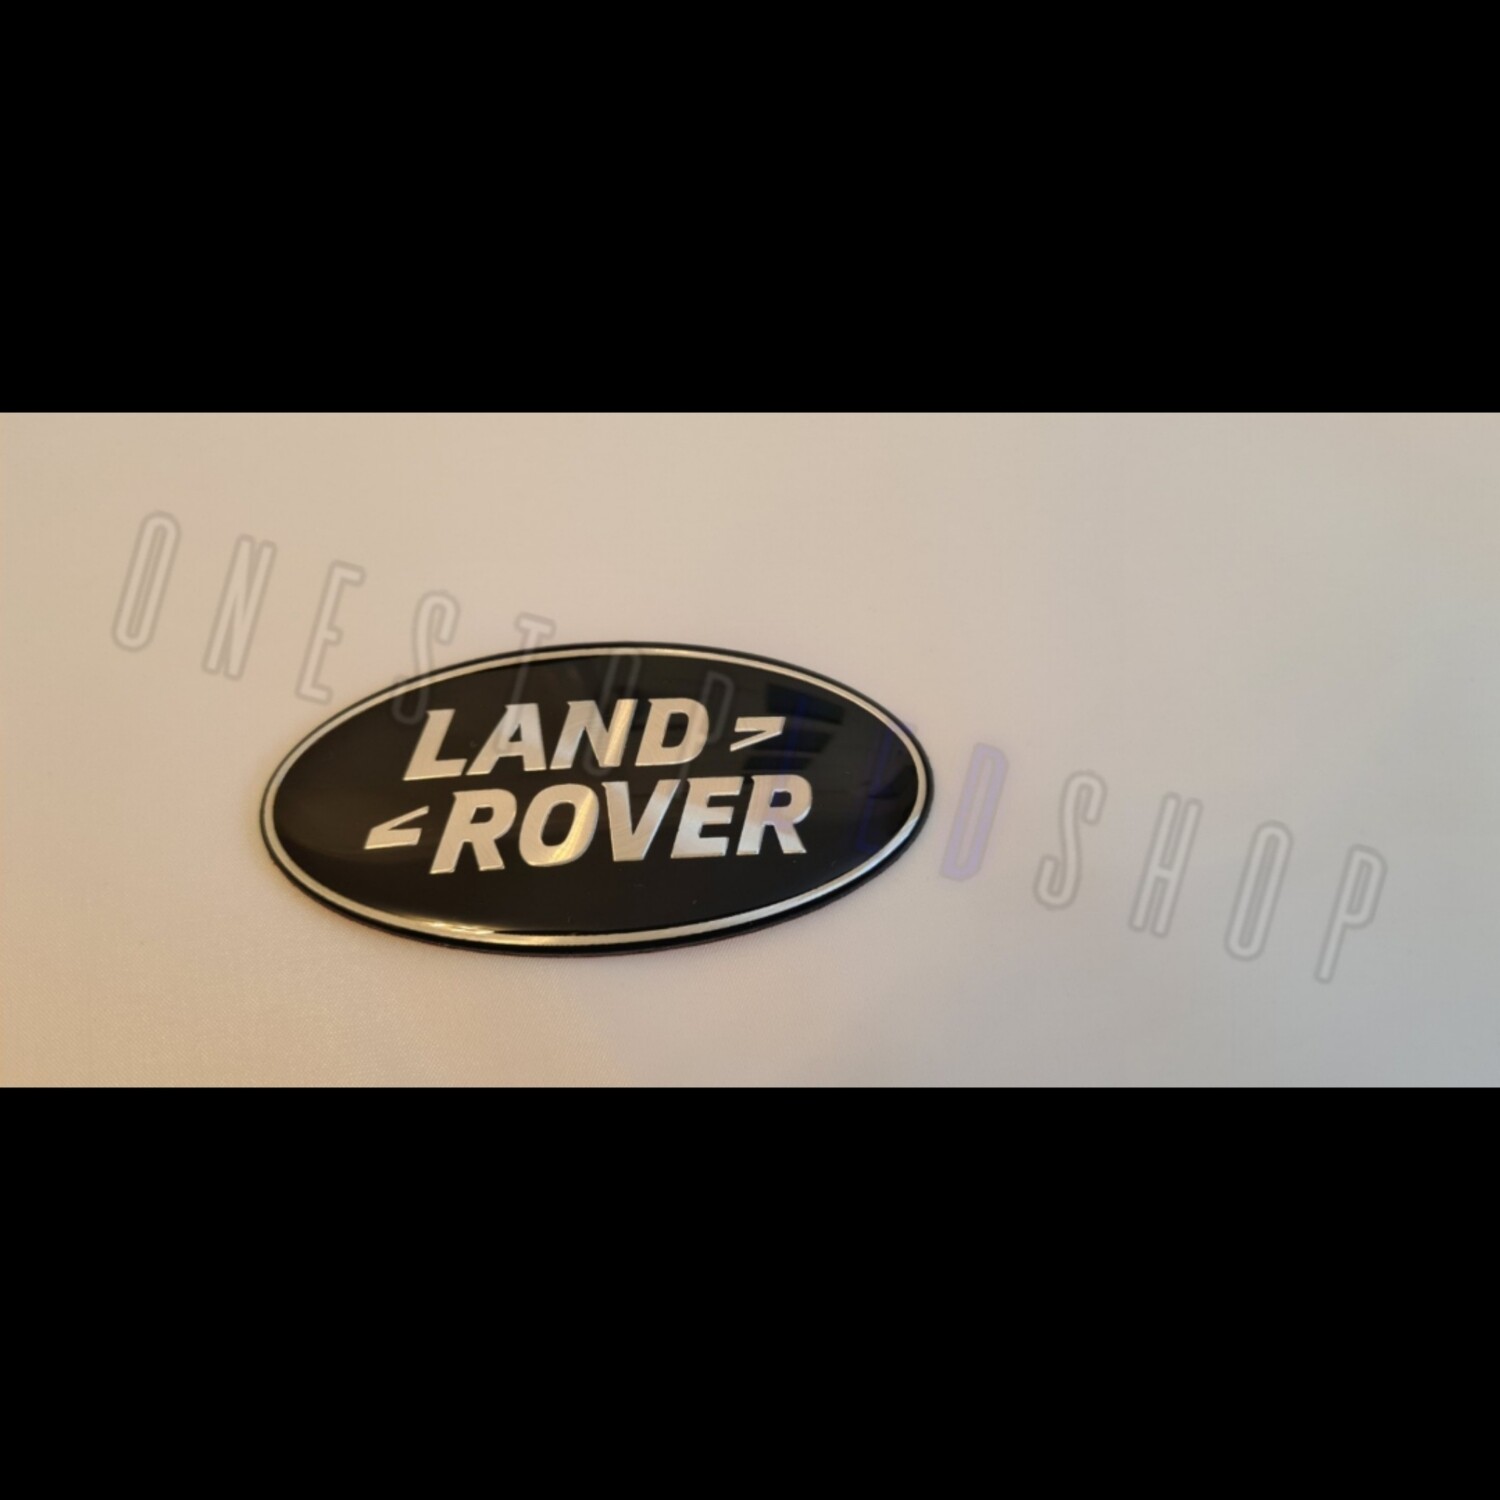 1pc 86 x 44mm black Land Rover badge emblem logo adhesive stick on